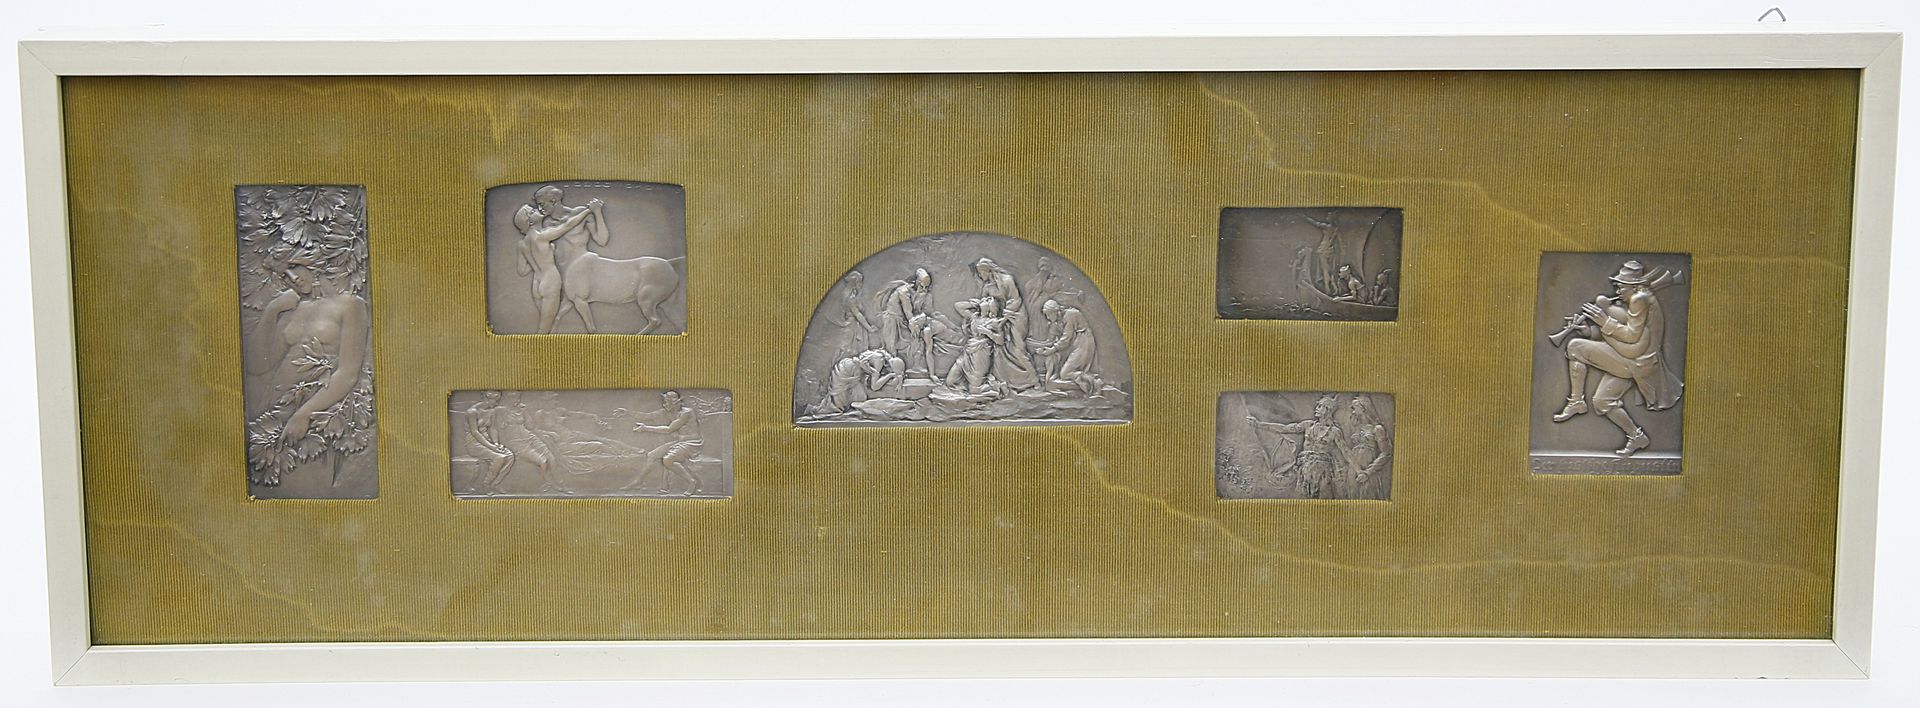 Sieben Wiener Jugendstil-Reliefplaketten bzw. -Medaillen.